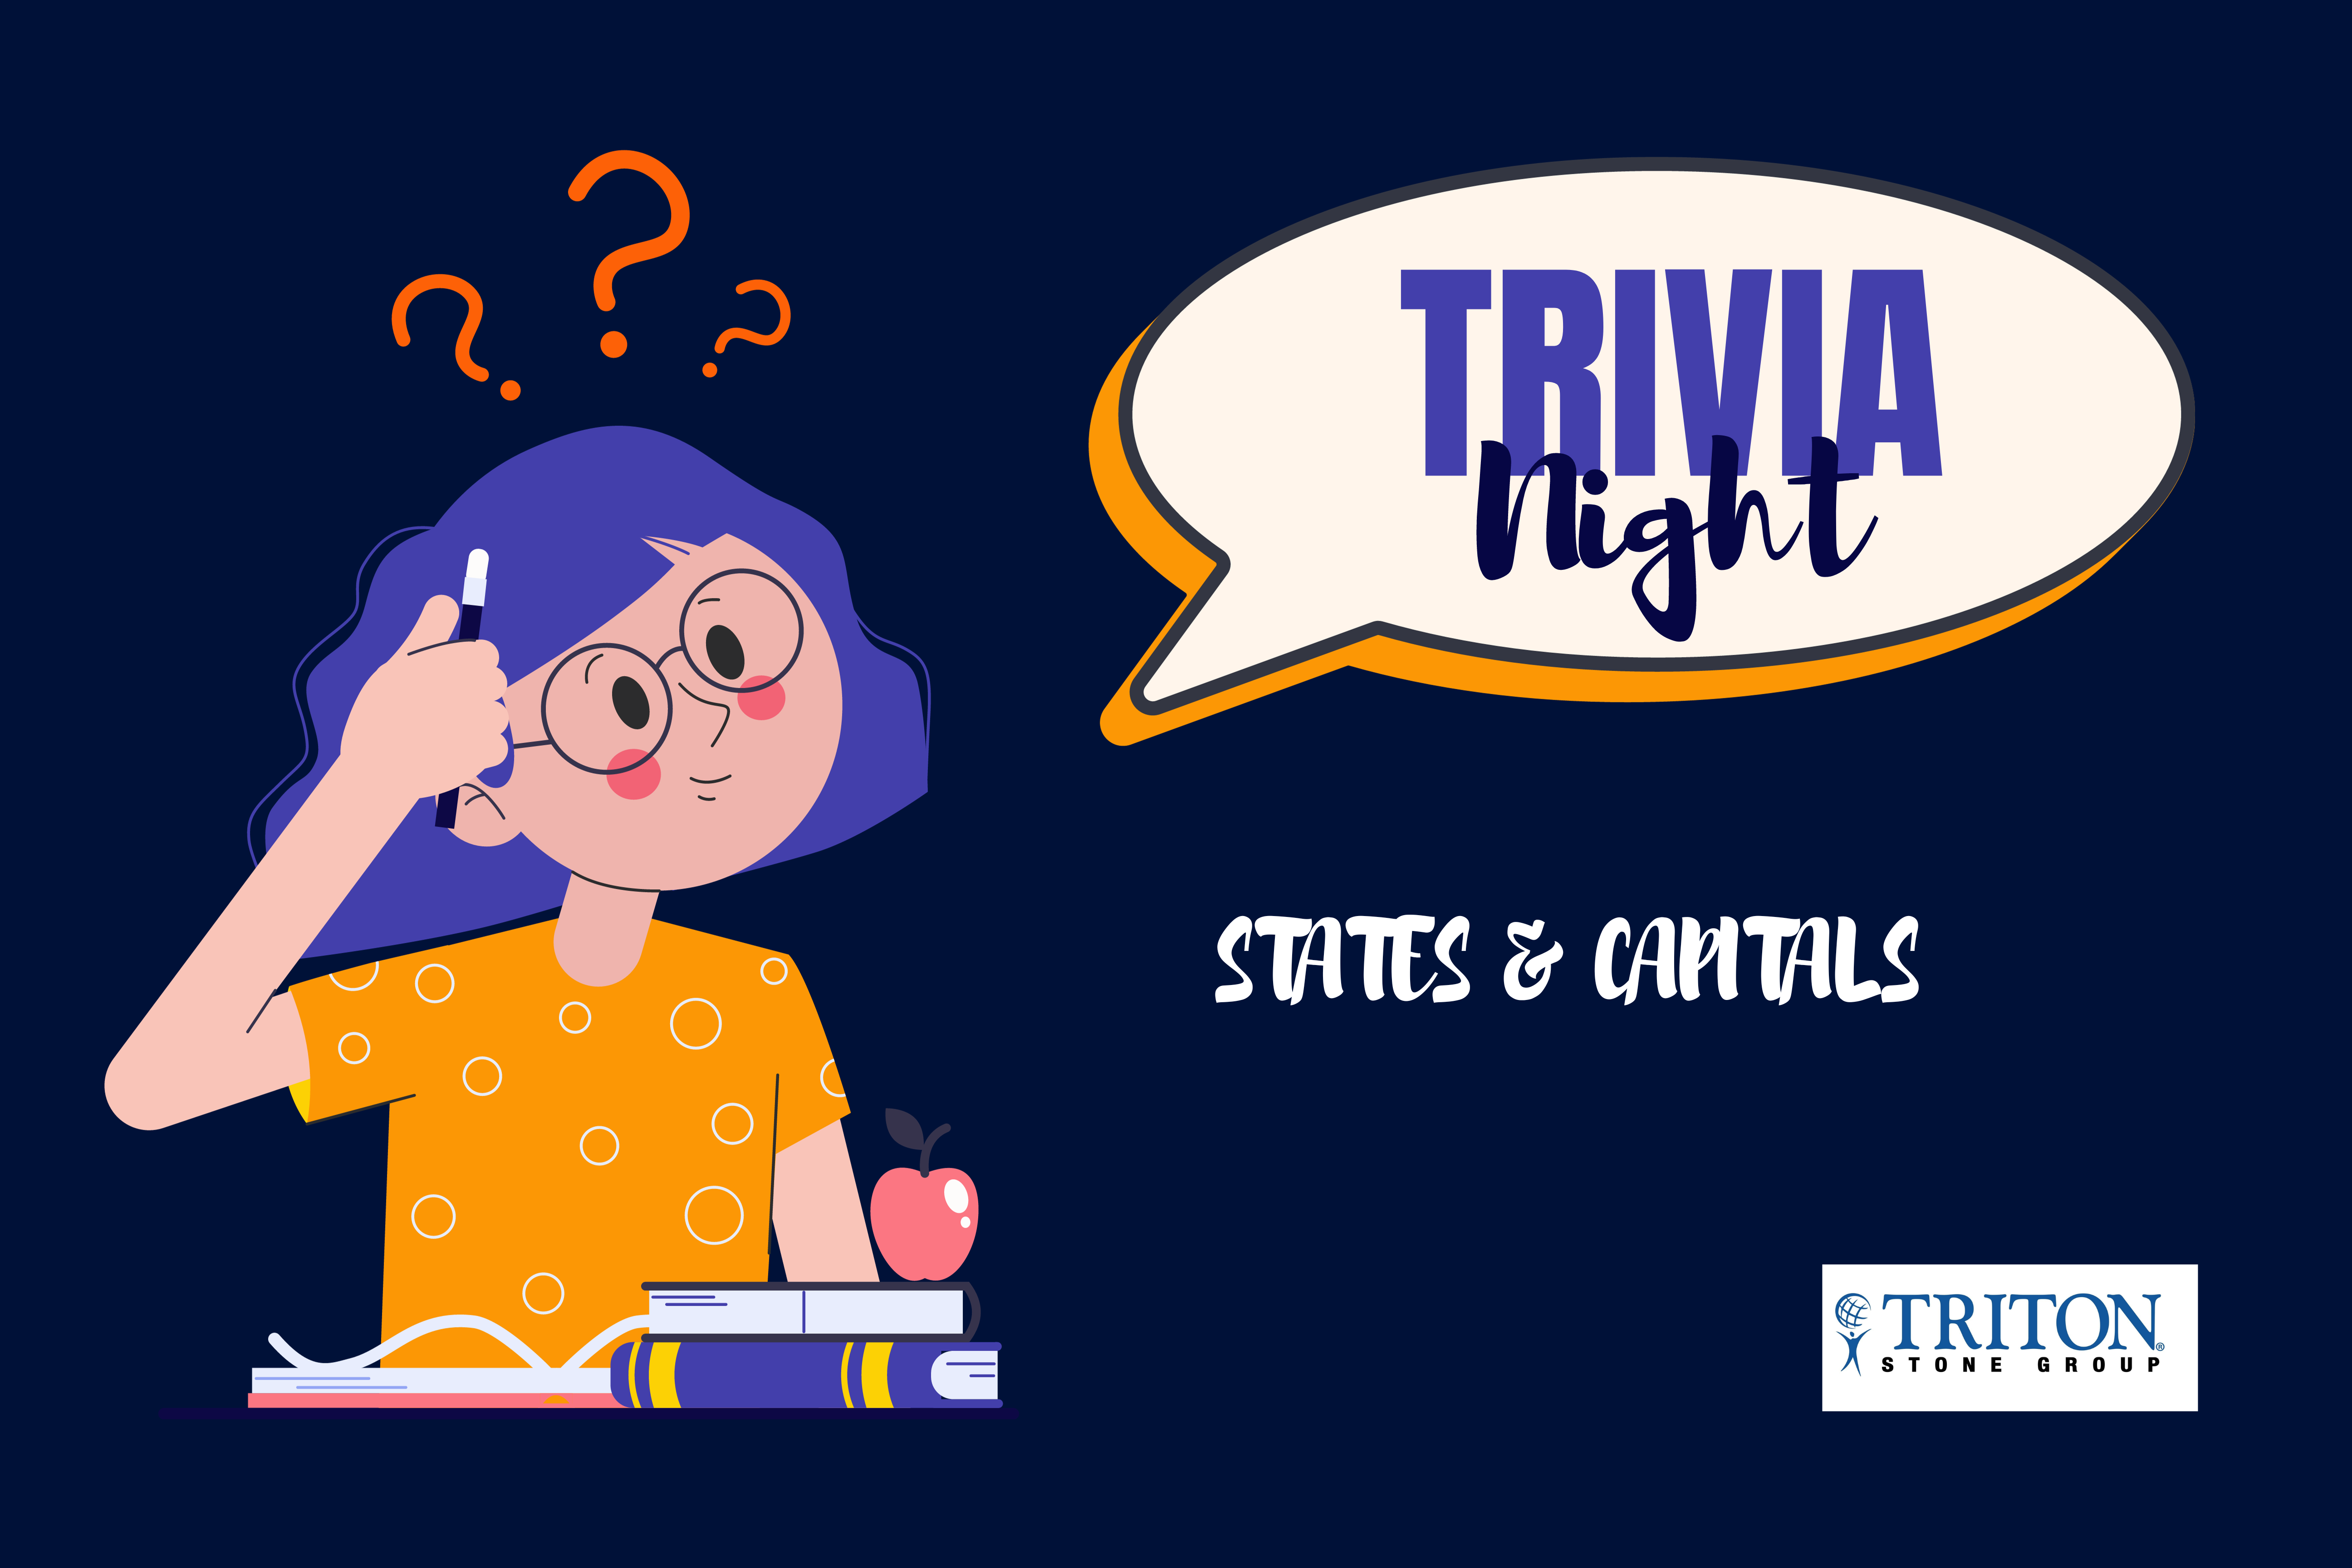 Triton Trivia - National States & Capitals